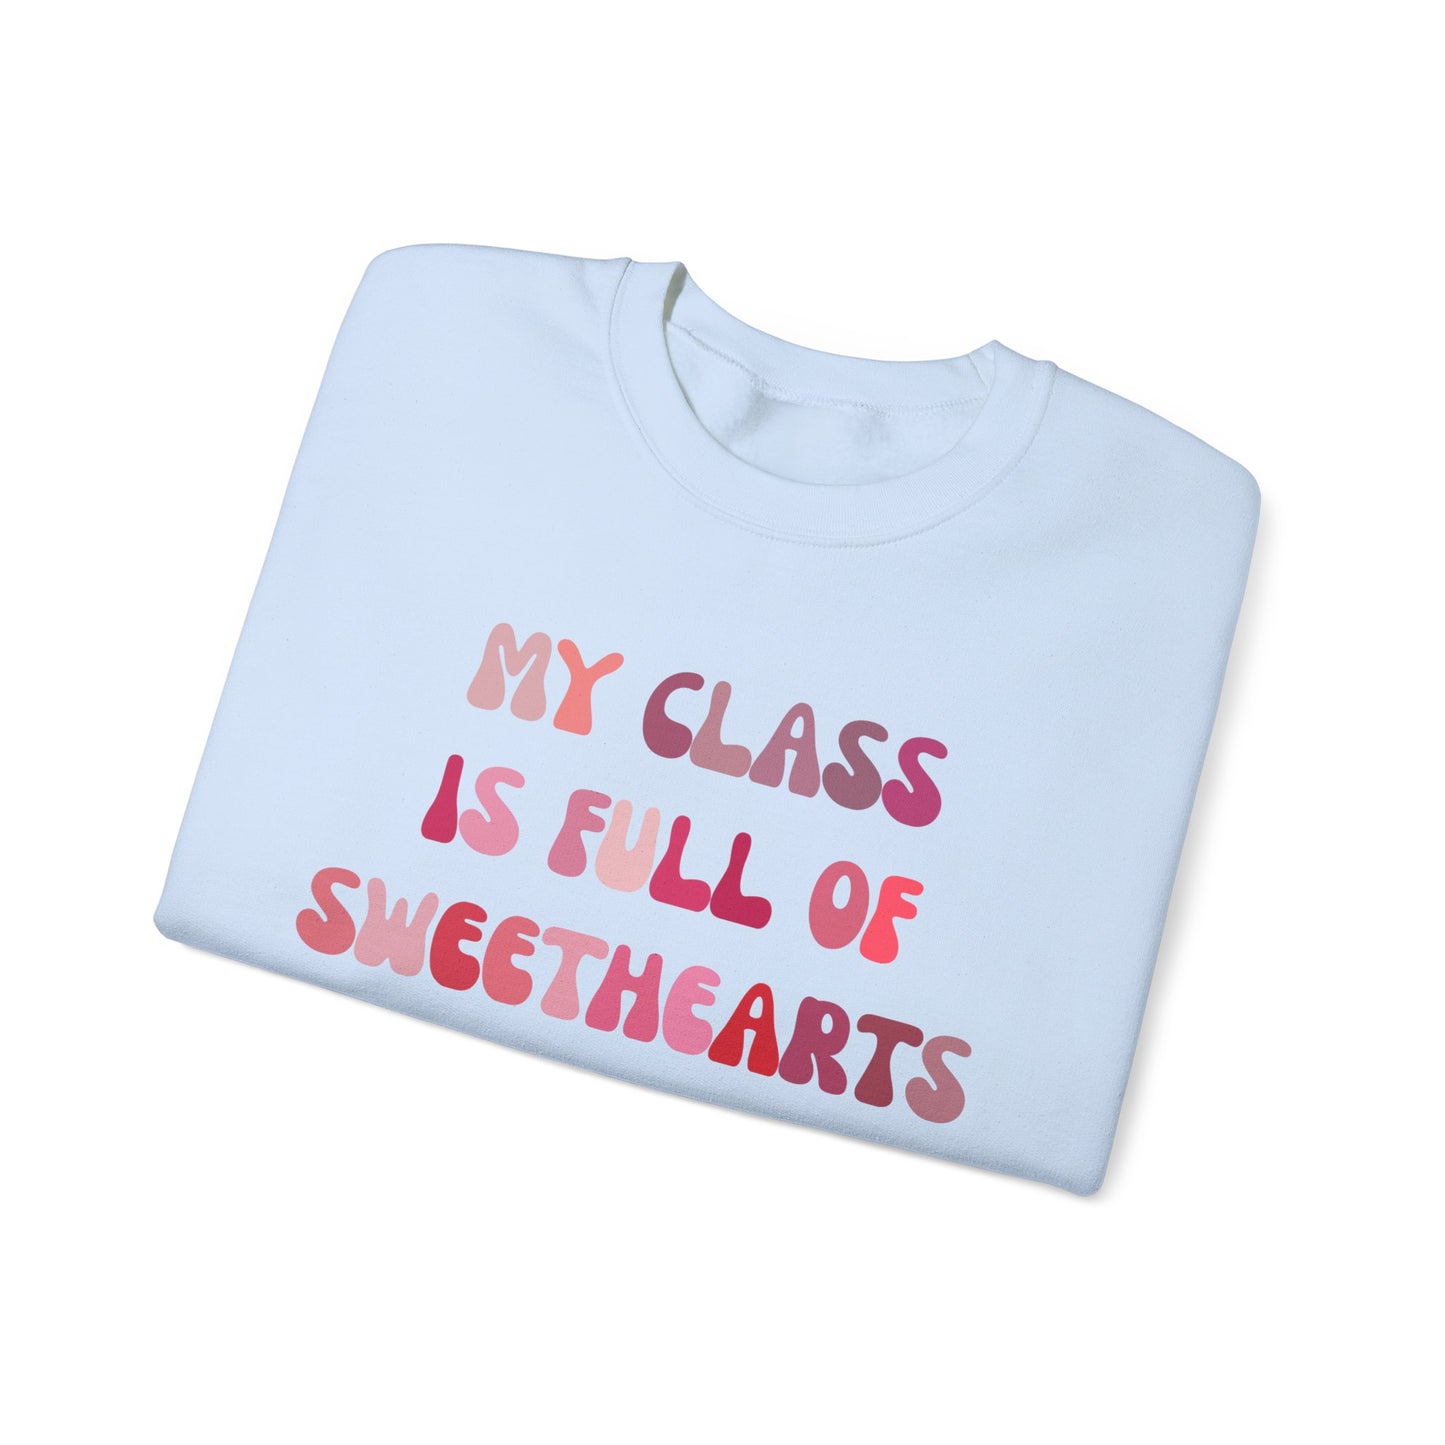 My Class Is Full Of Sweethearts Sweatshirt Valentines Day Teacher Sweatshirt, Teacher Love Heart Sweatshirt, Teacher Valentines Gift, SW1277